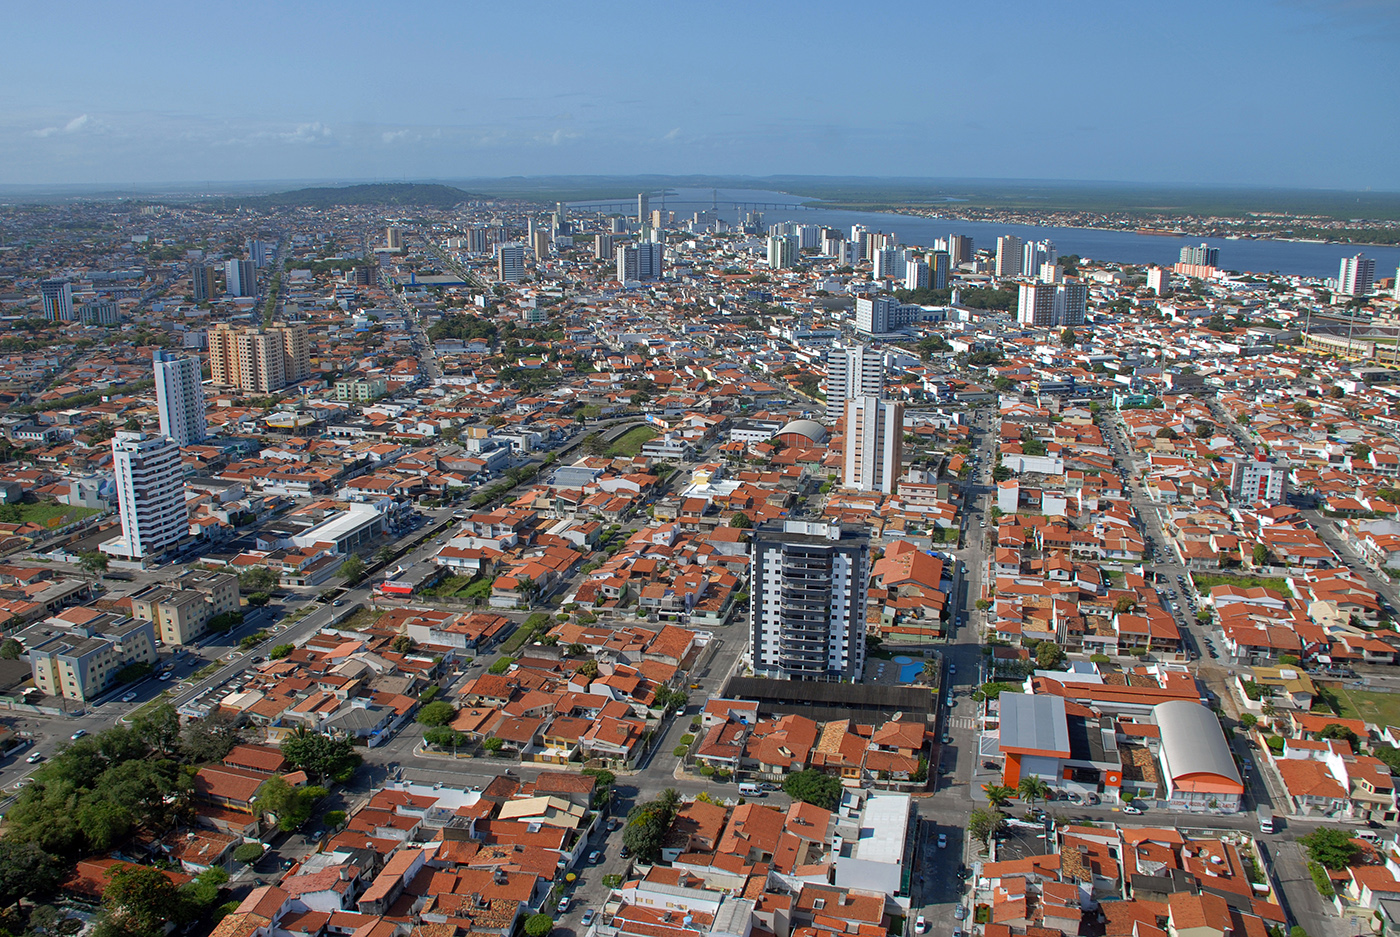 Regional Nordeste de Xadrez reuniu 240 enxadristas em Aracaju/SE